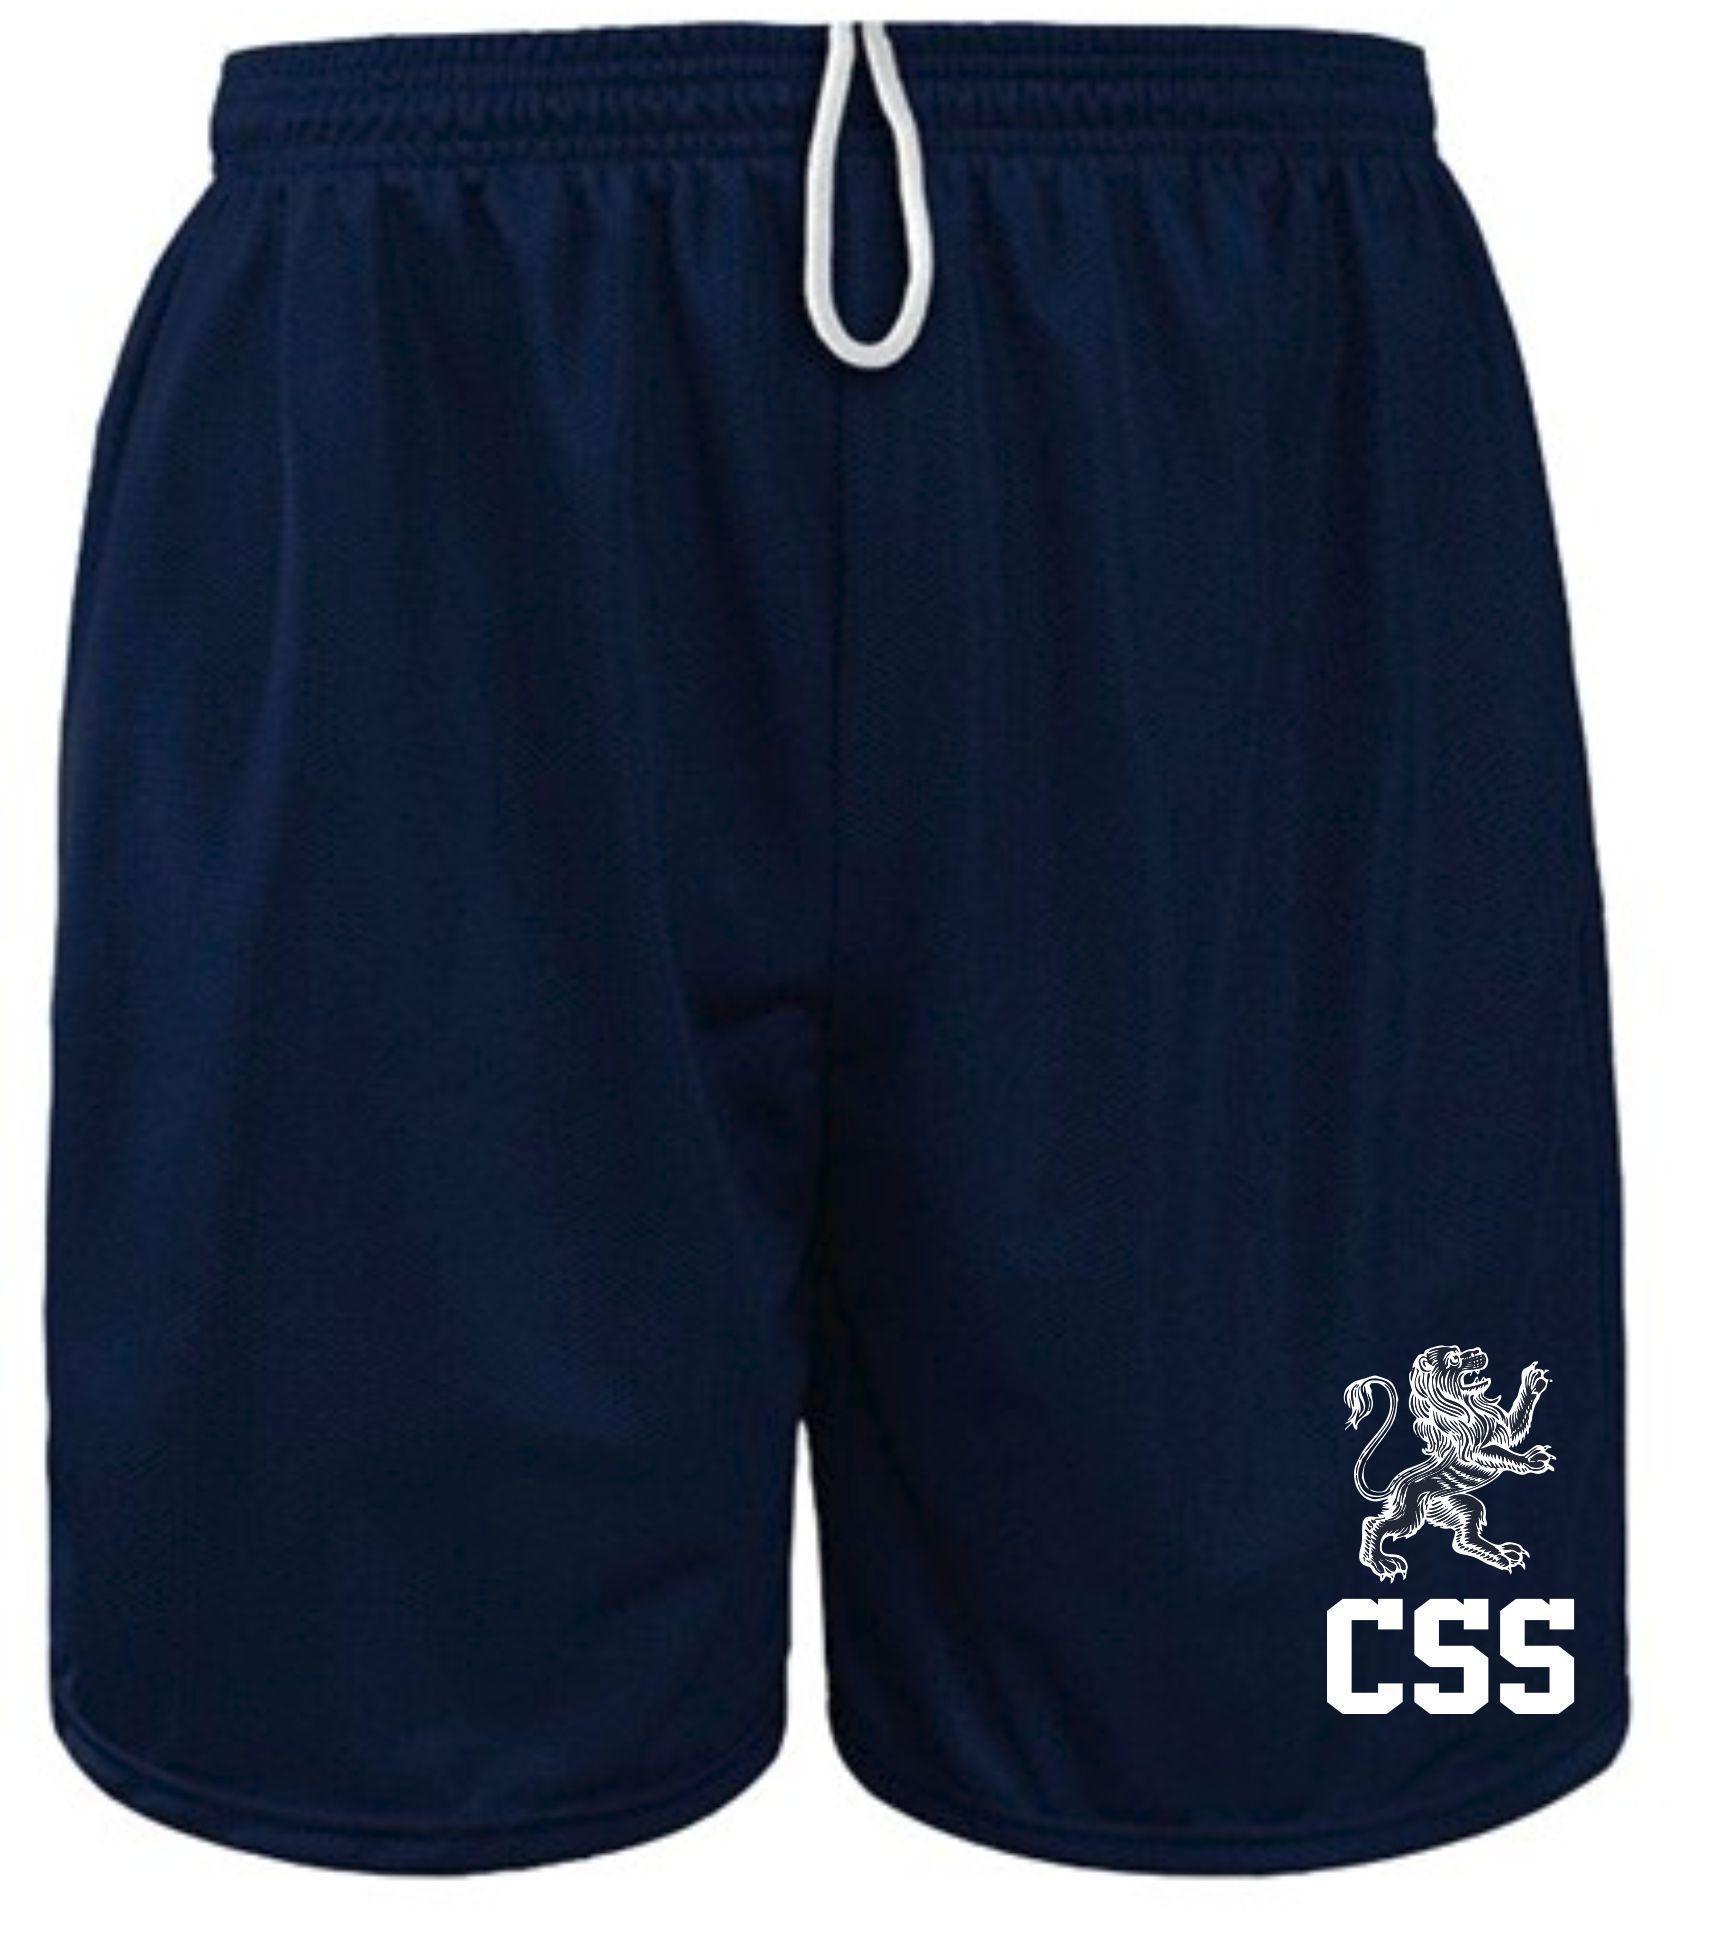 CSS Sprit Shorts